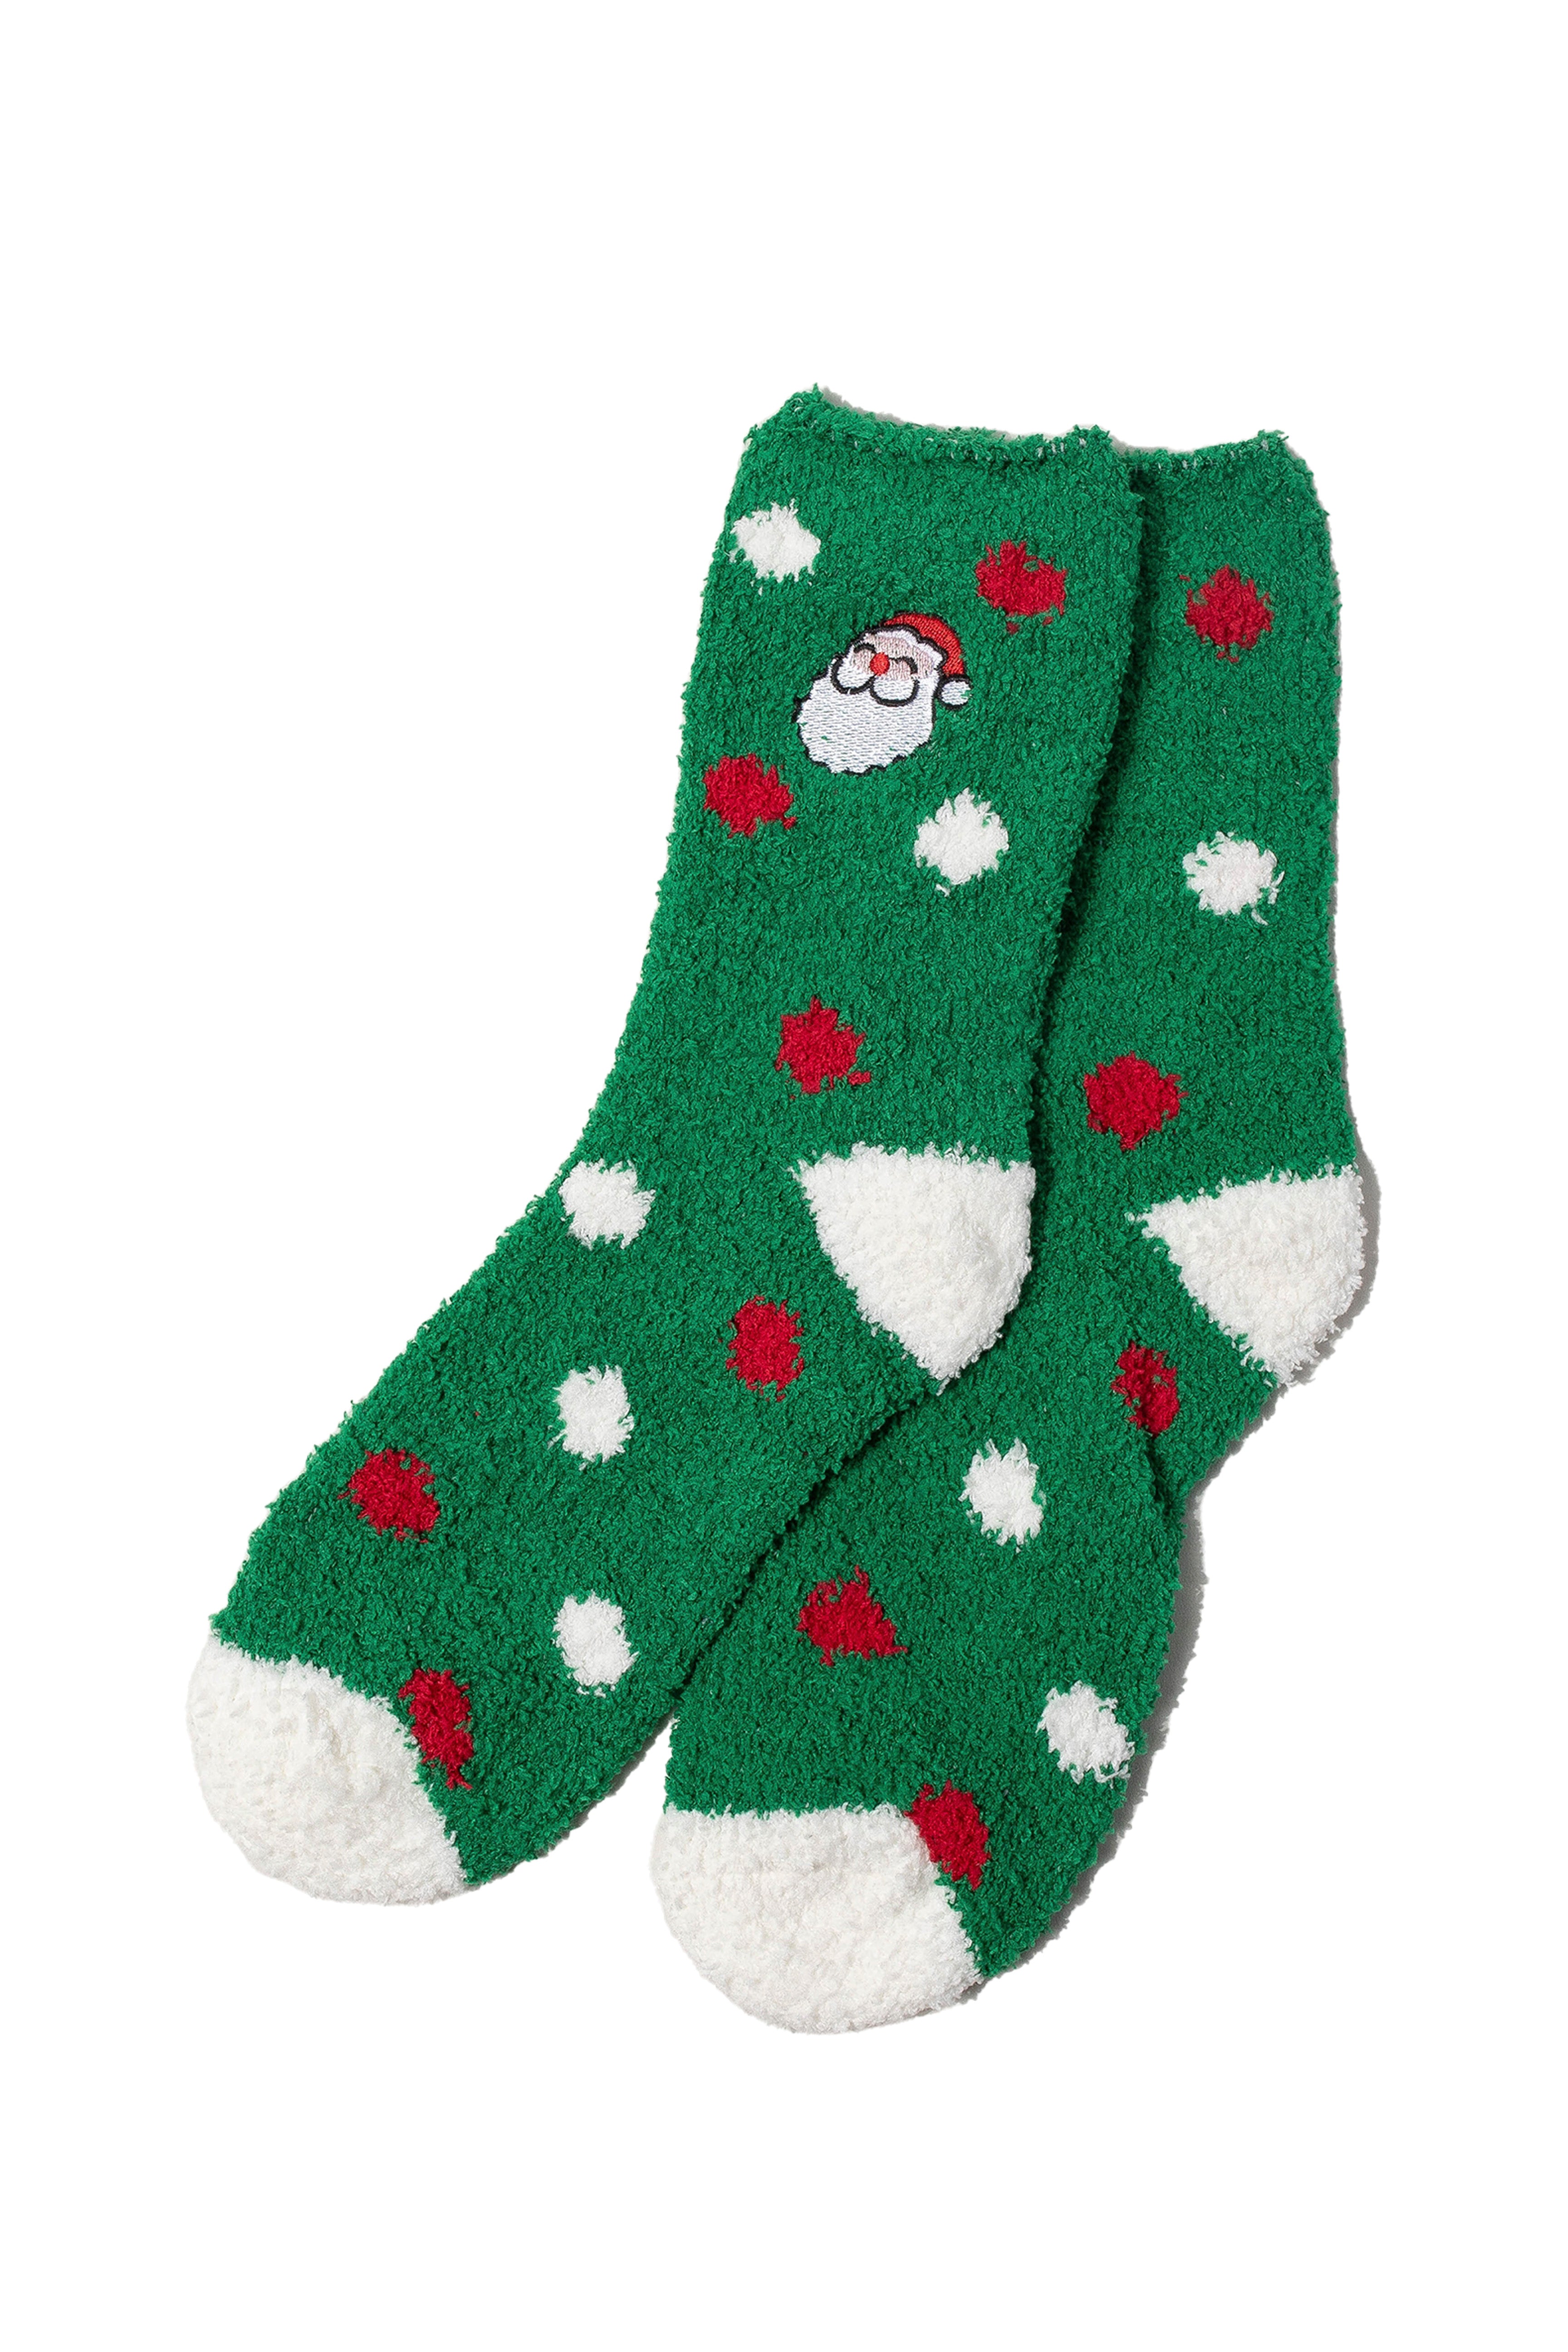 5415  -Assorted Christmas Sleep Socks (Multi Color)- FINAL SALE